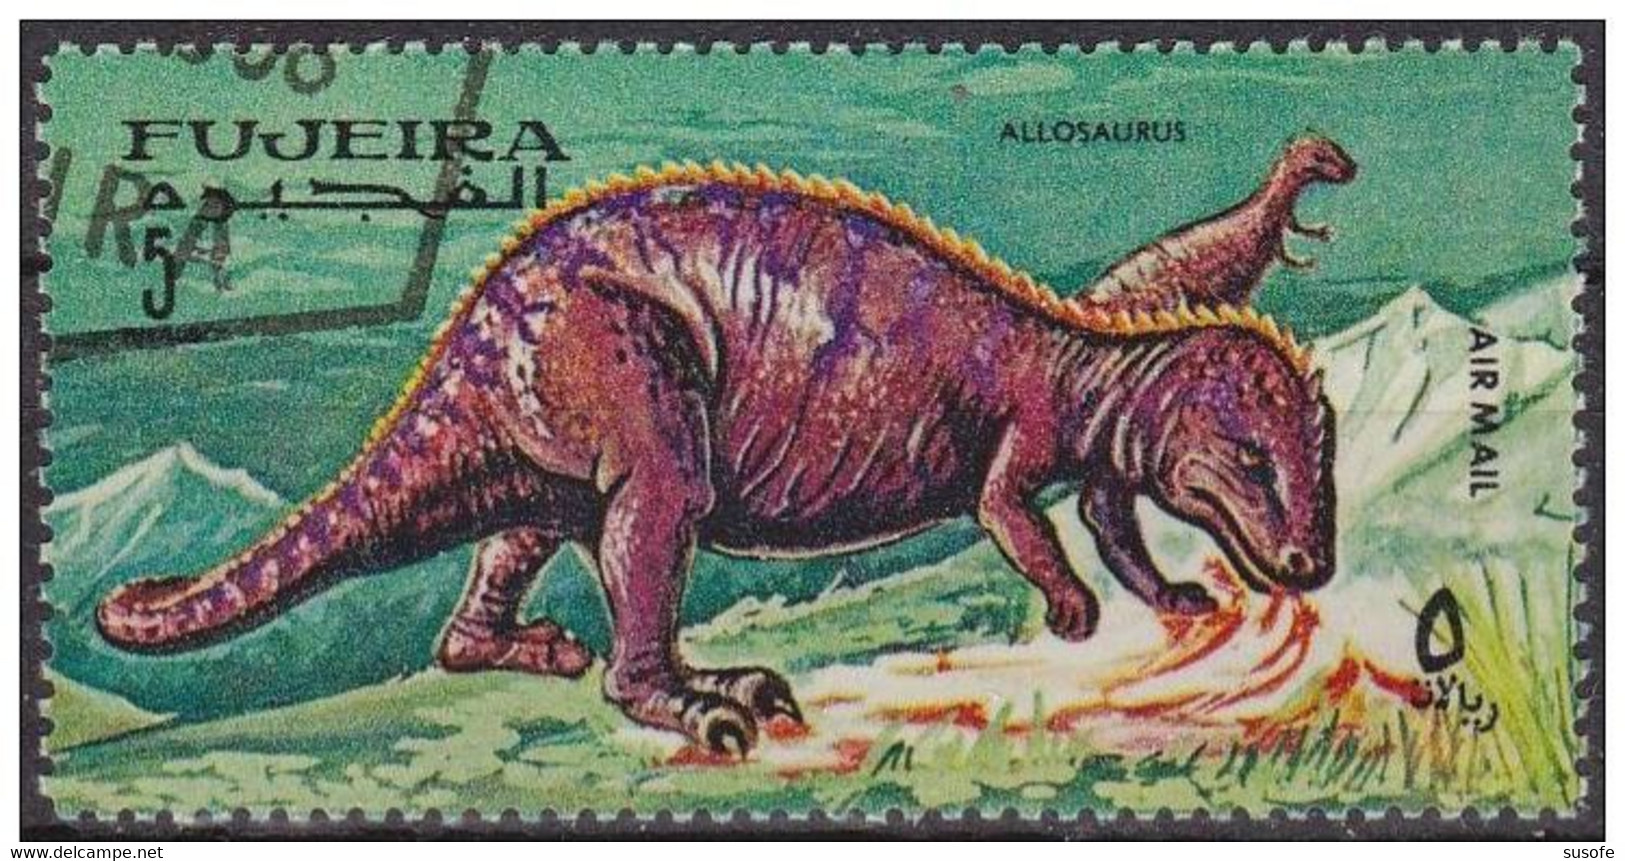 Fujeira 1968 Michel 256A Sello * Animales Prehistoricos Allosaurus Correo Aereo Yvert 78-E Fuyaira Fujairah Stamps - Fudschaira